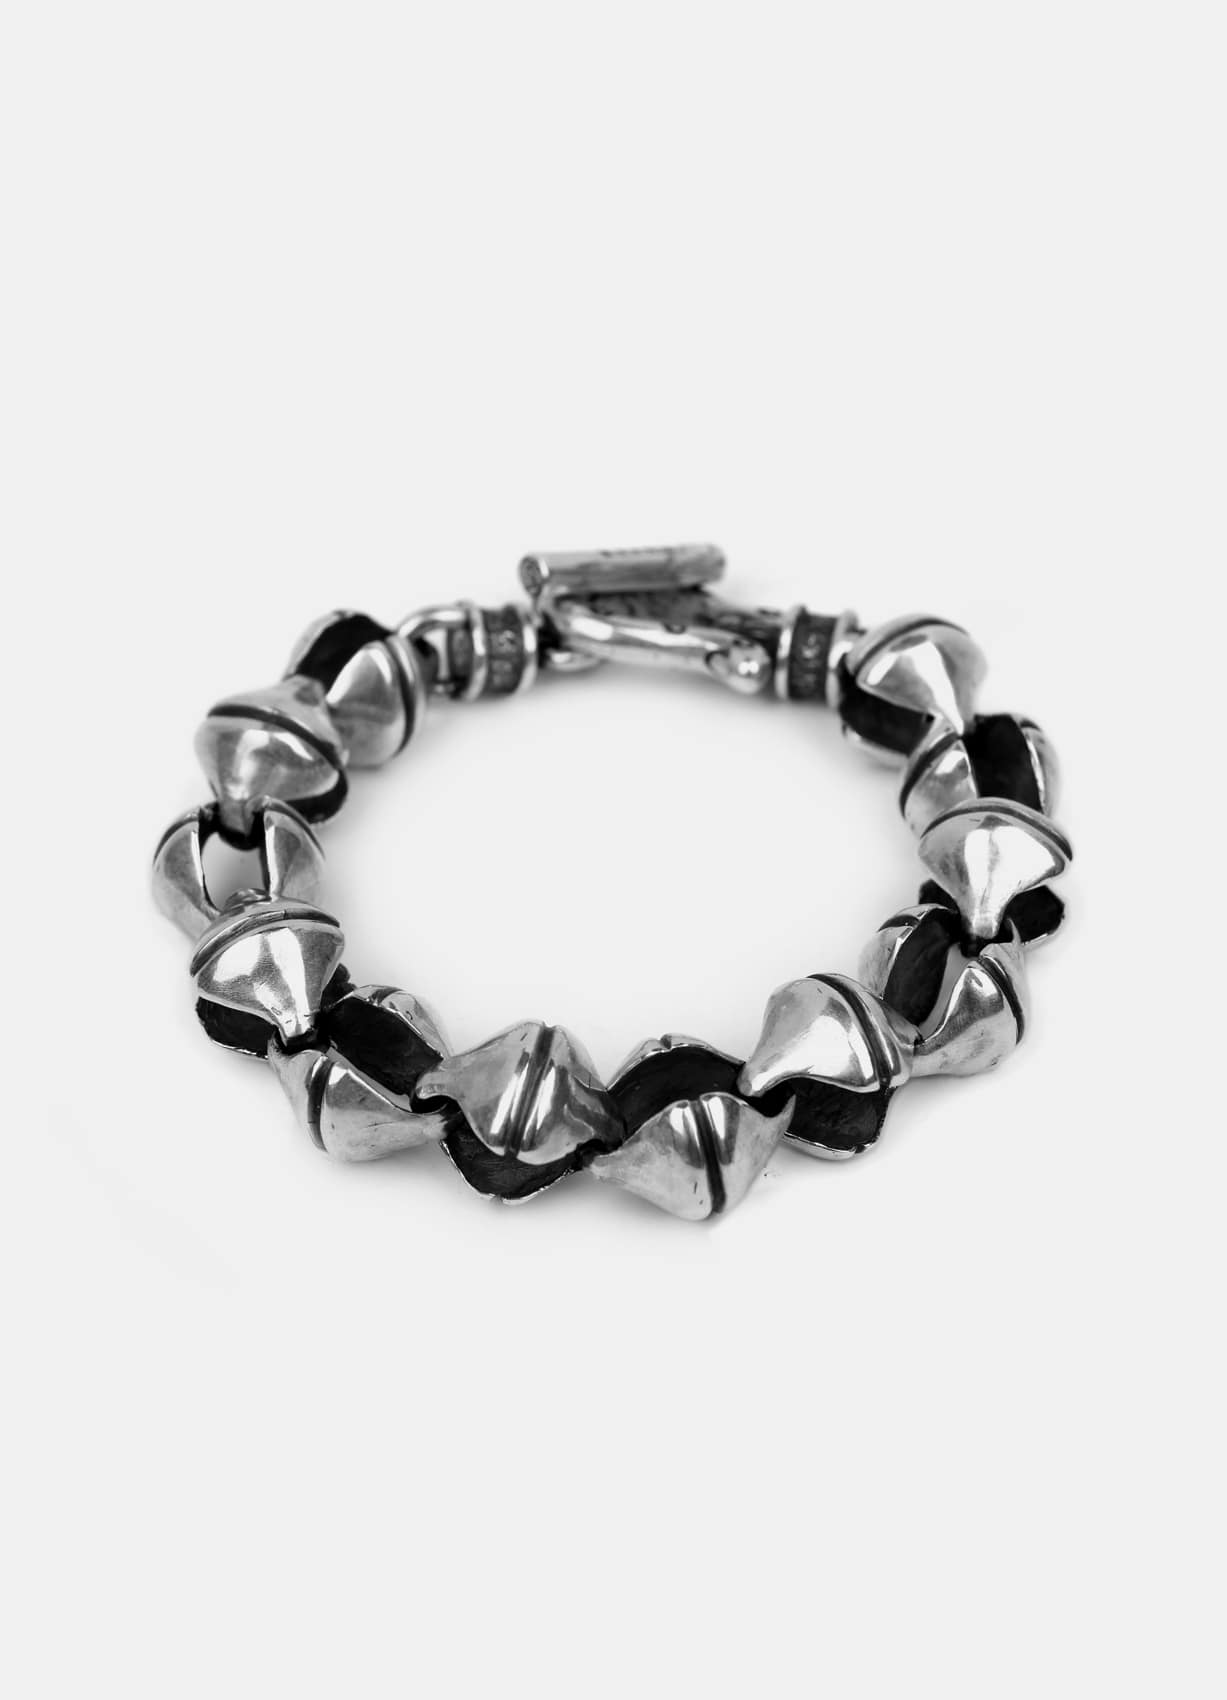 664 Silver chain bracelet